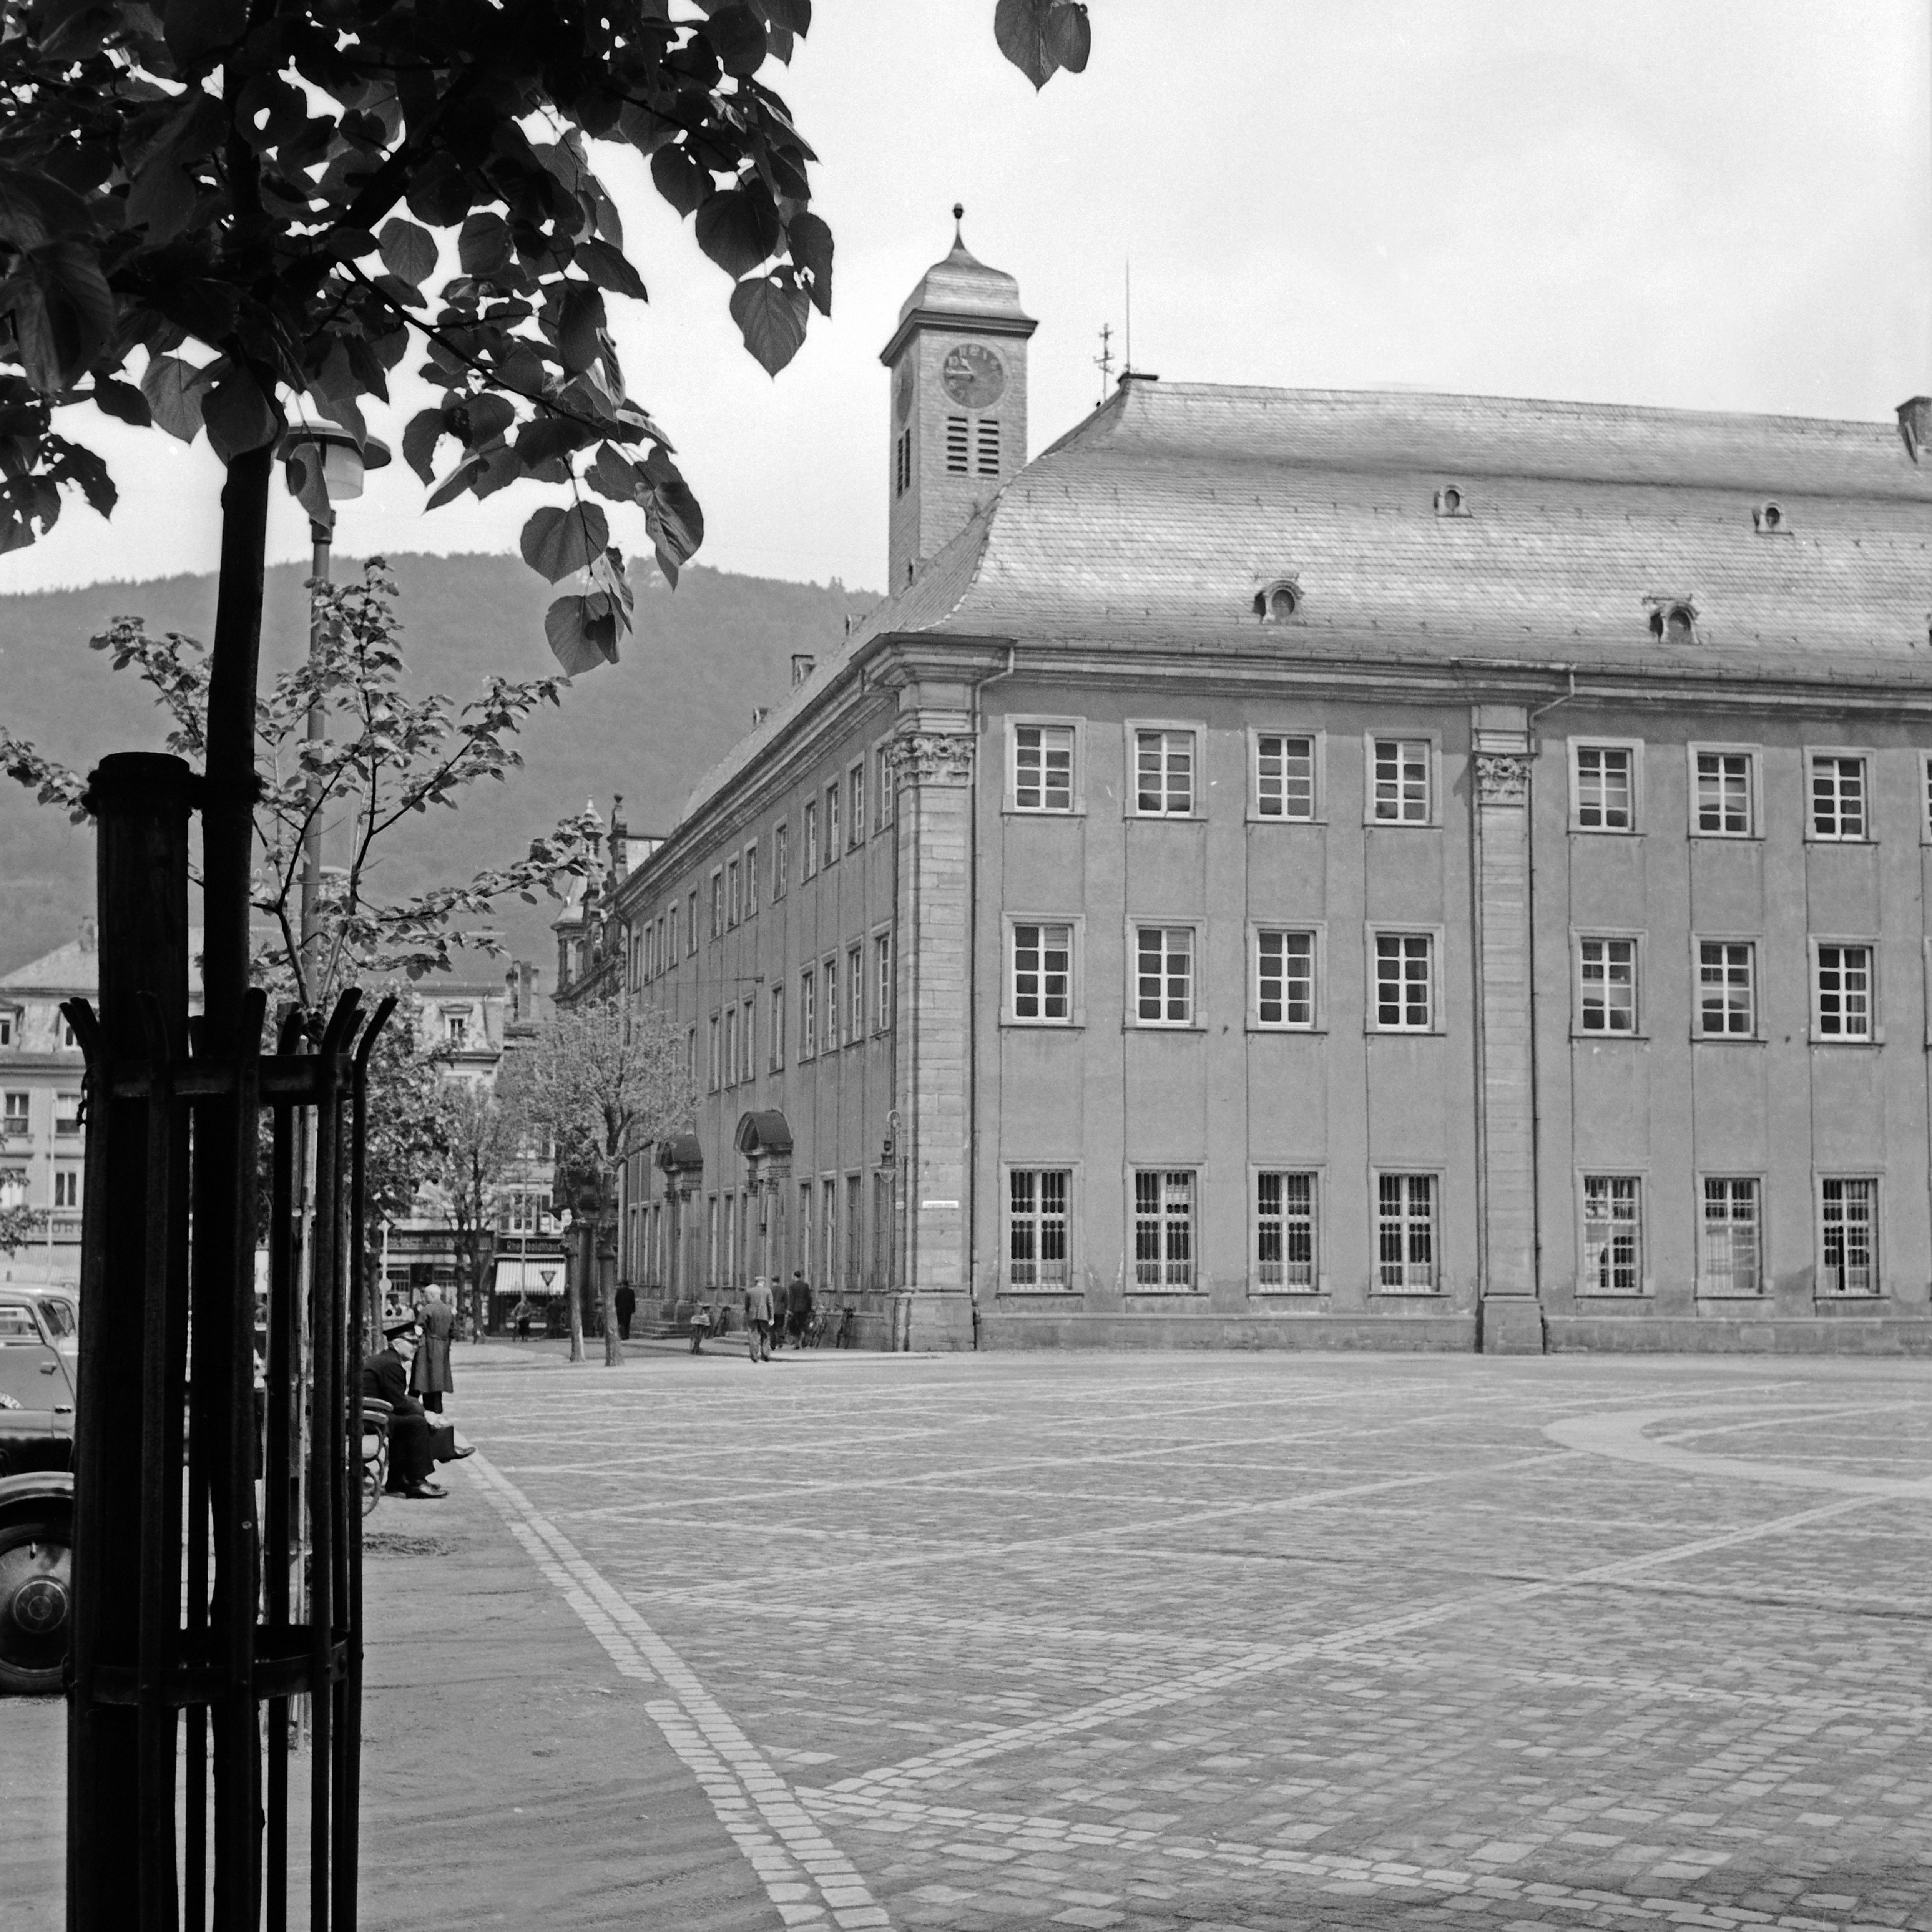 Karl Heinrich Lämmel Black and White Photograph - Ruprecht Karls university, Heidelberg Germany 1938, Printed Later